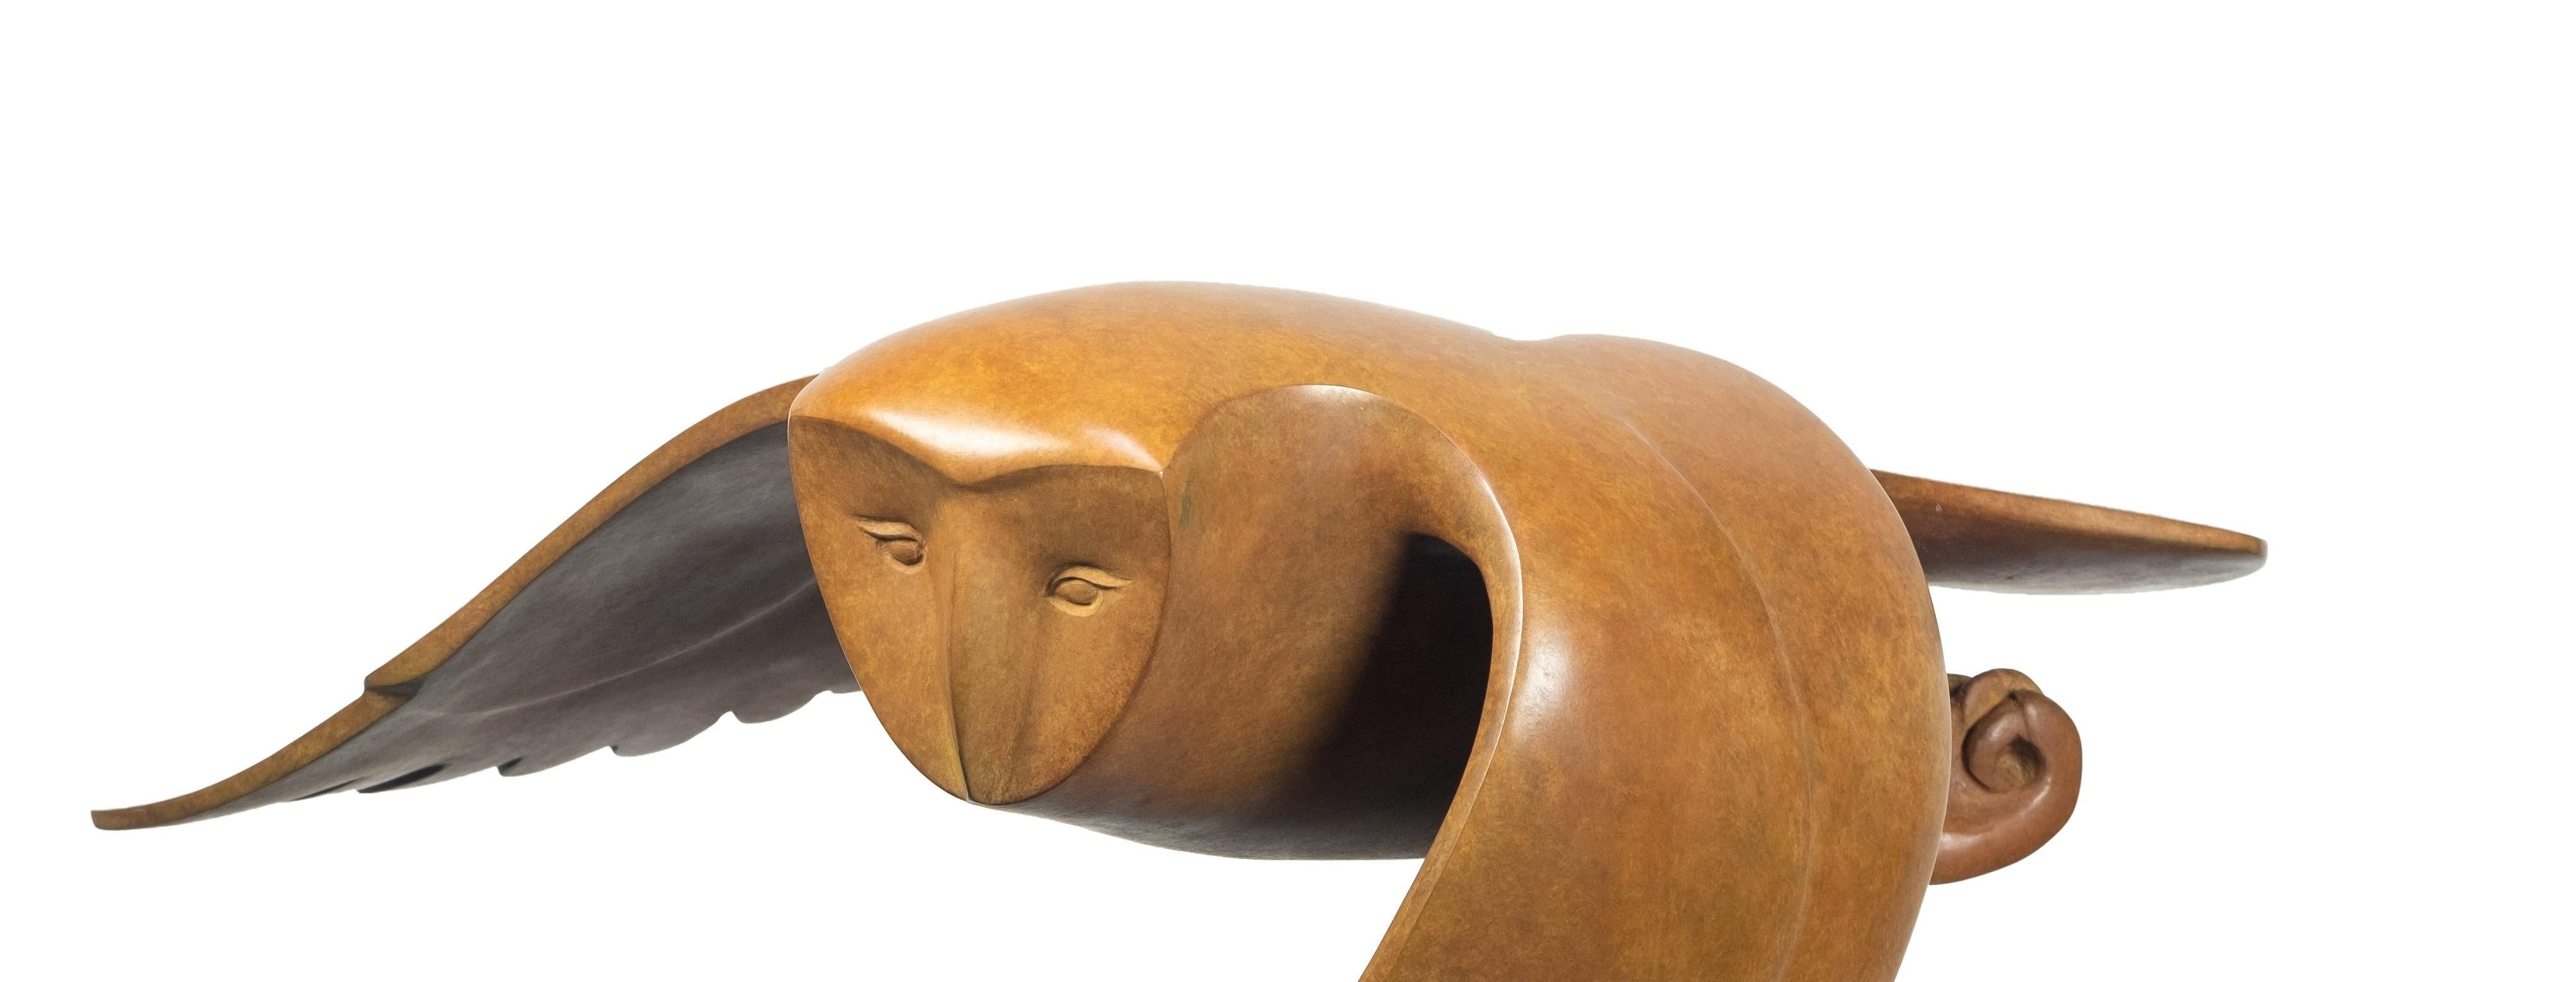 Sculpture animalière Vliegende Uil n° 5 (hibou volant)   - Or Figurative Sculpture par Evert den Hartog